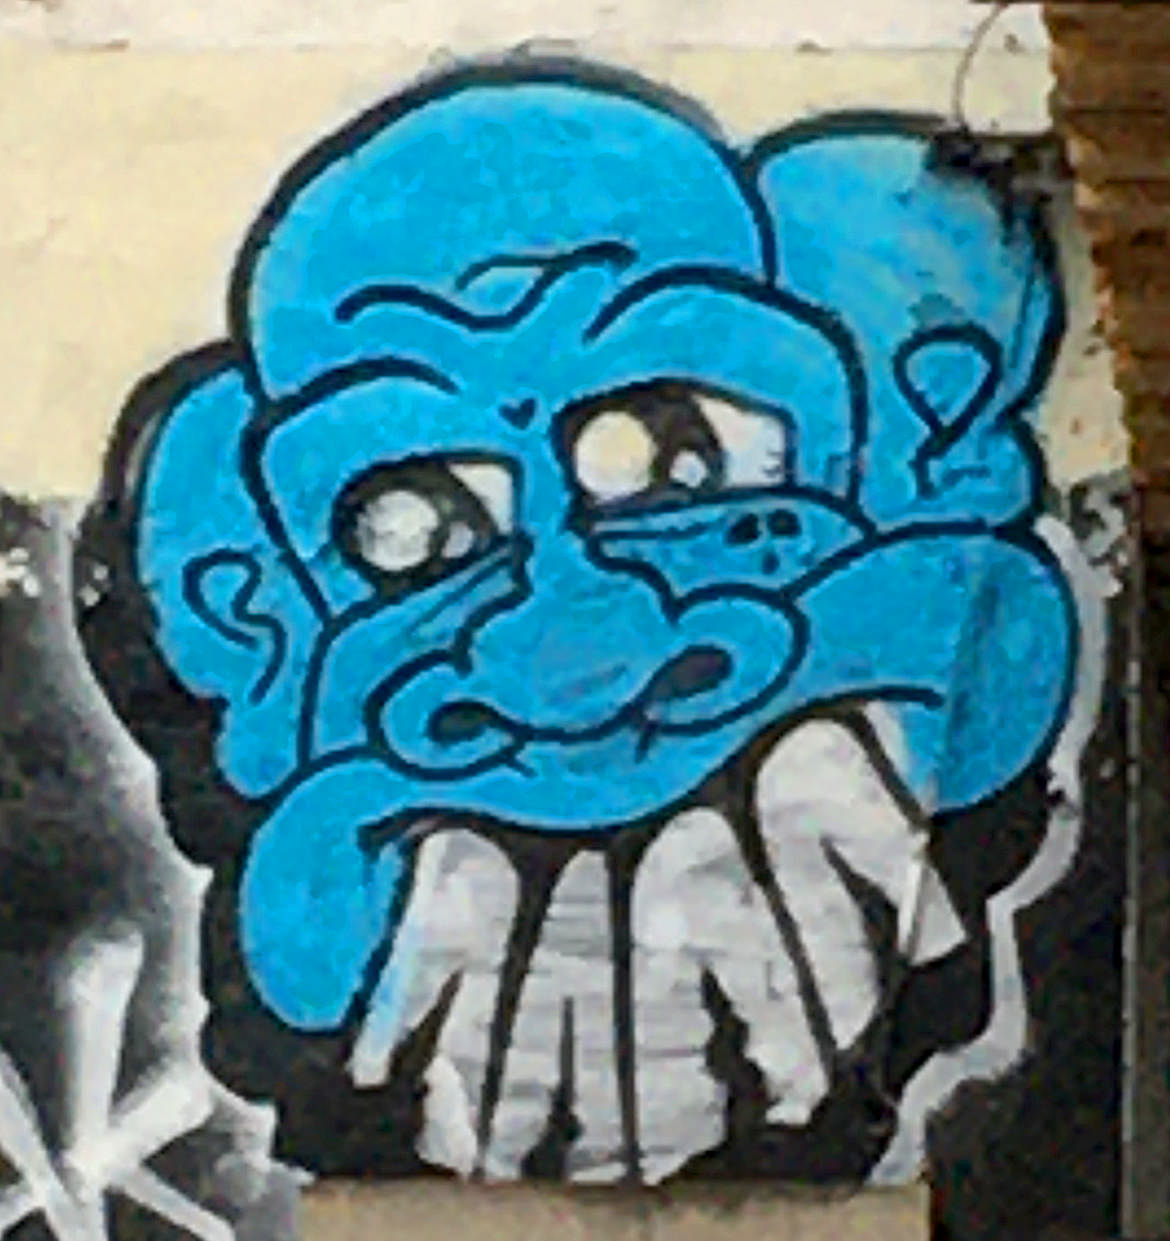 Spray paint graffiti blue cartoon face with large white buck teeth